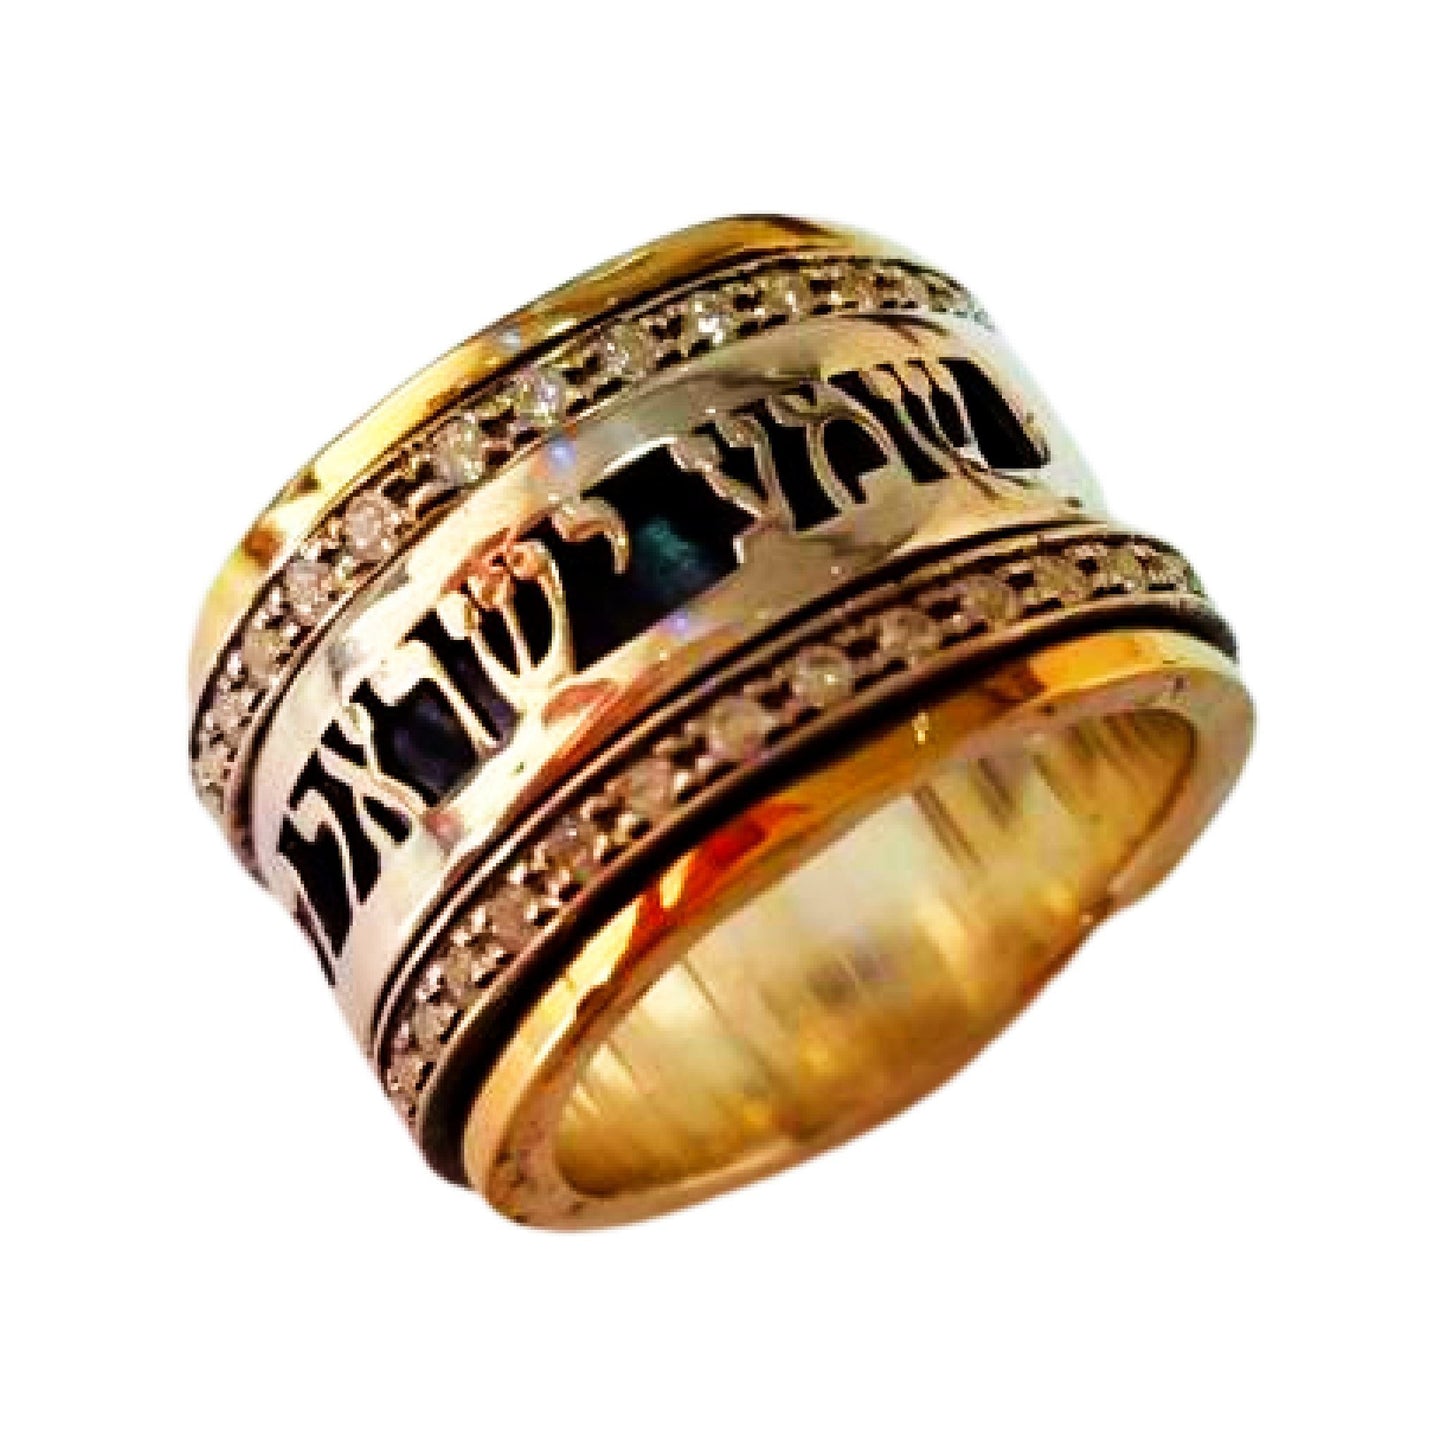 Bluenoemi Jewelry Personalized Rings Israeli jewelry designers ring Personalized Ring message Hebrew love verse ring